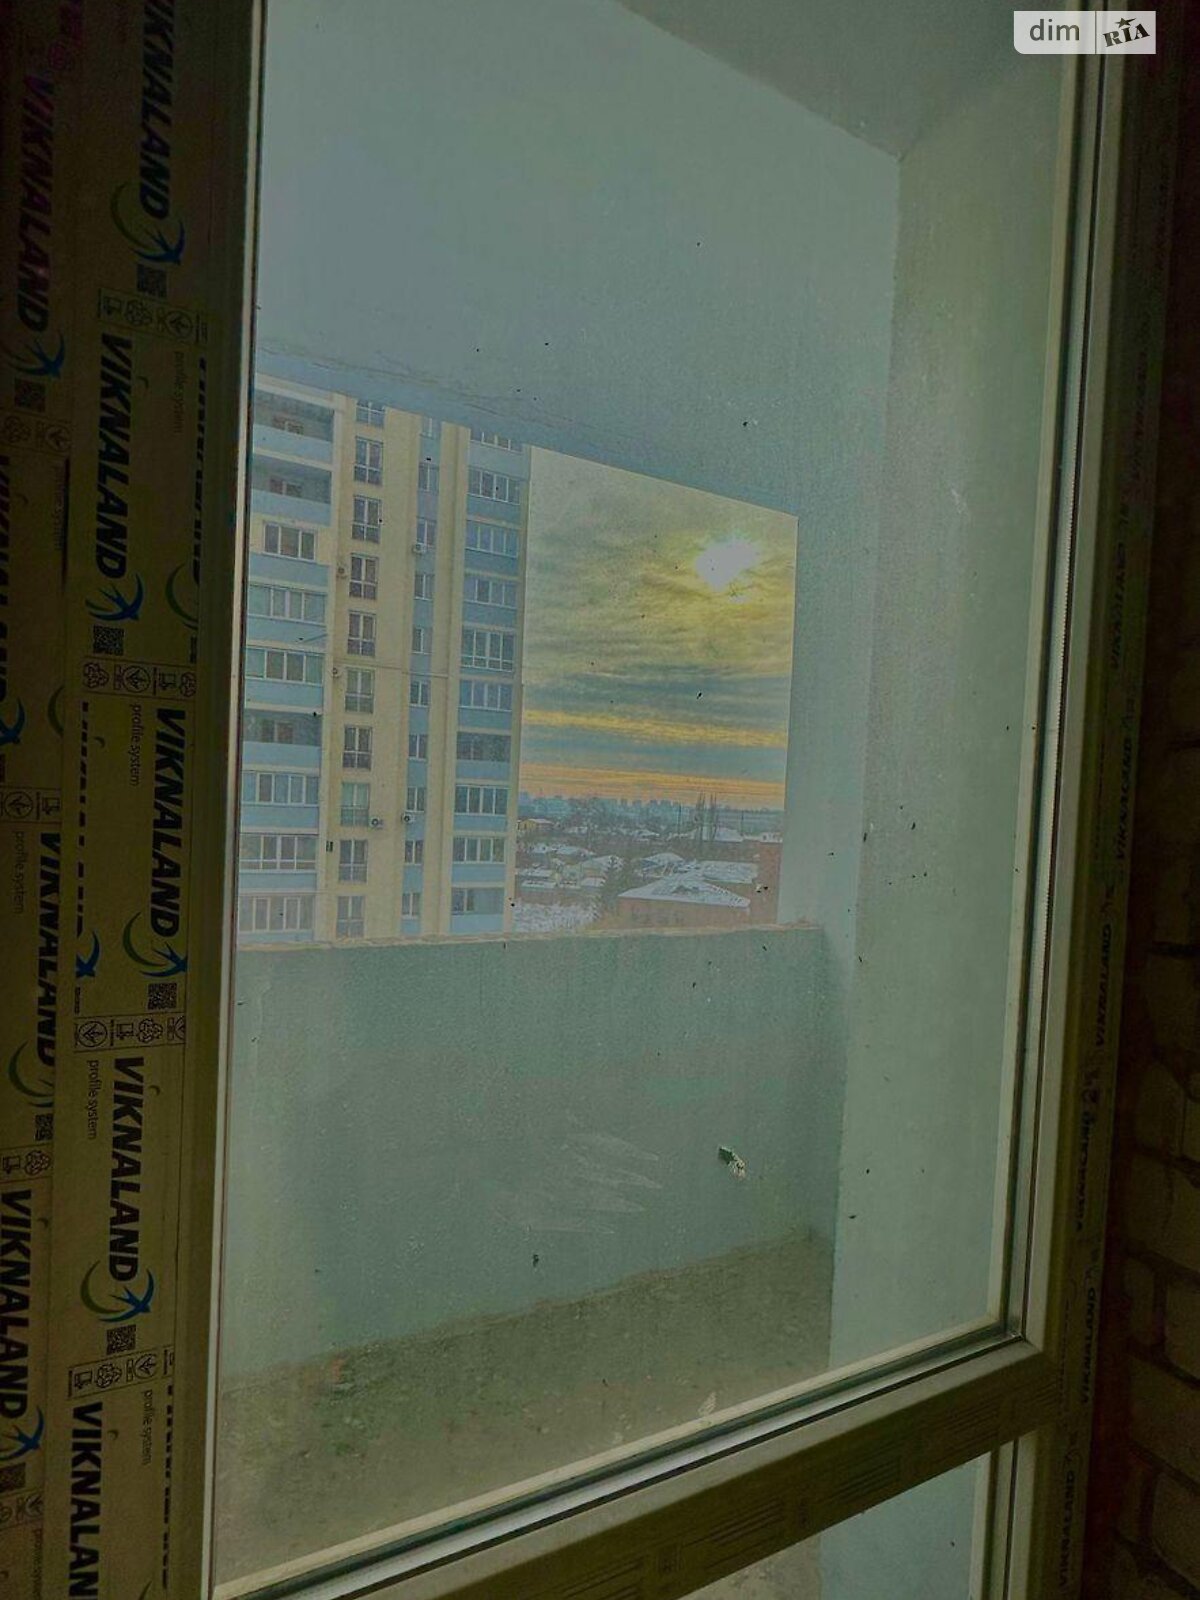 Продажа двухкомнатной квартиры в Харькове, на ул. Елизаветинская 5А, район Левада фото 1